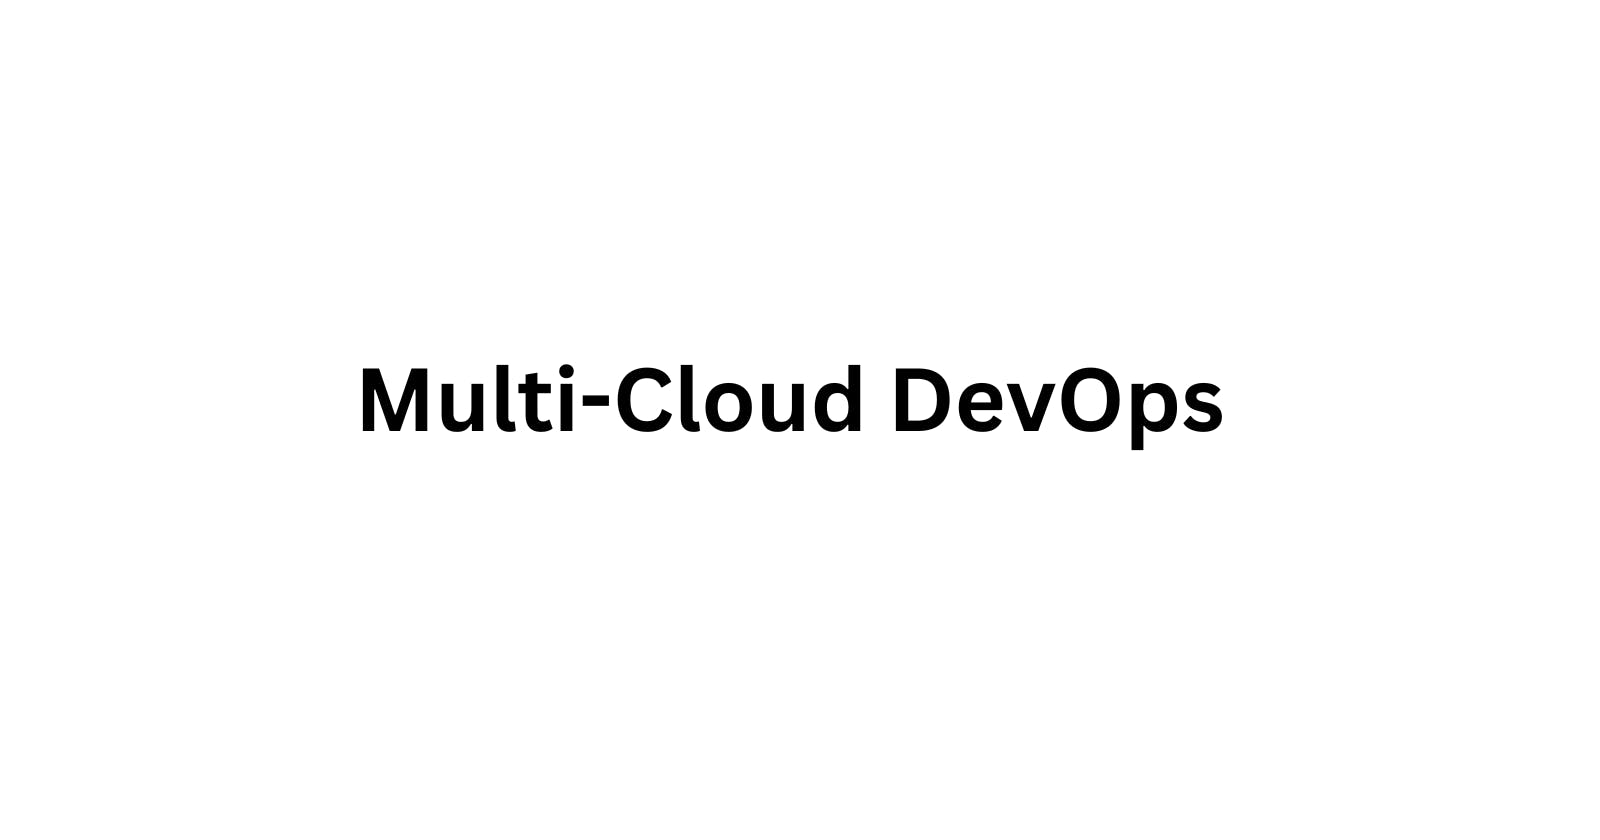 Multi-Cloud DevOps Solutions